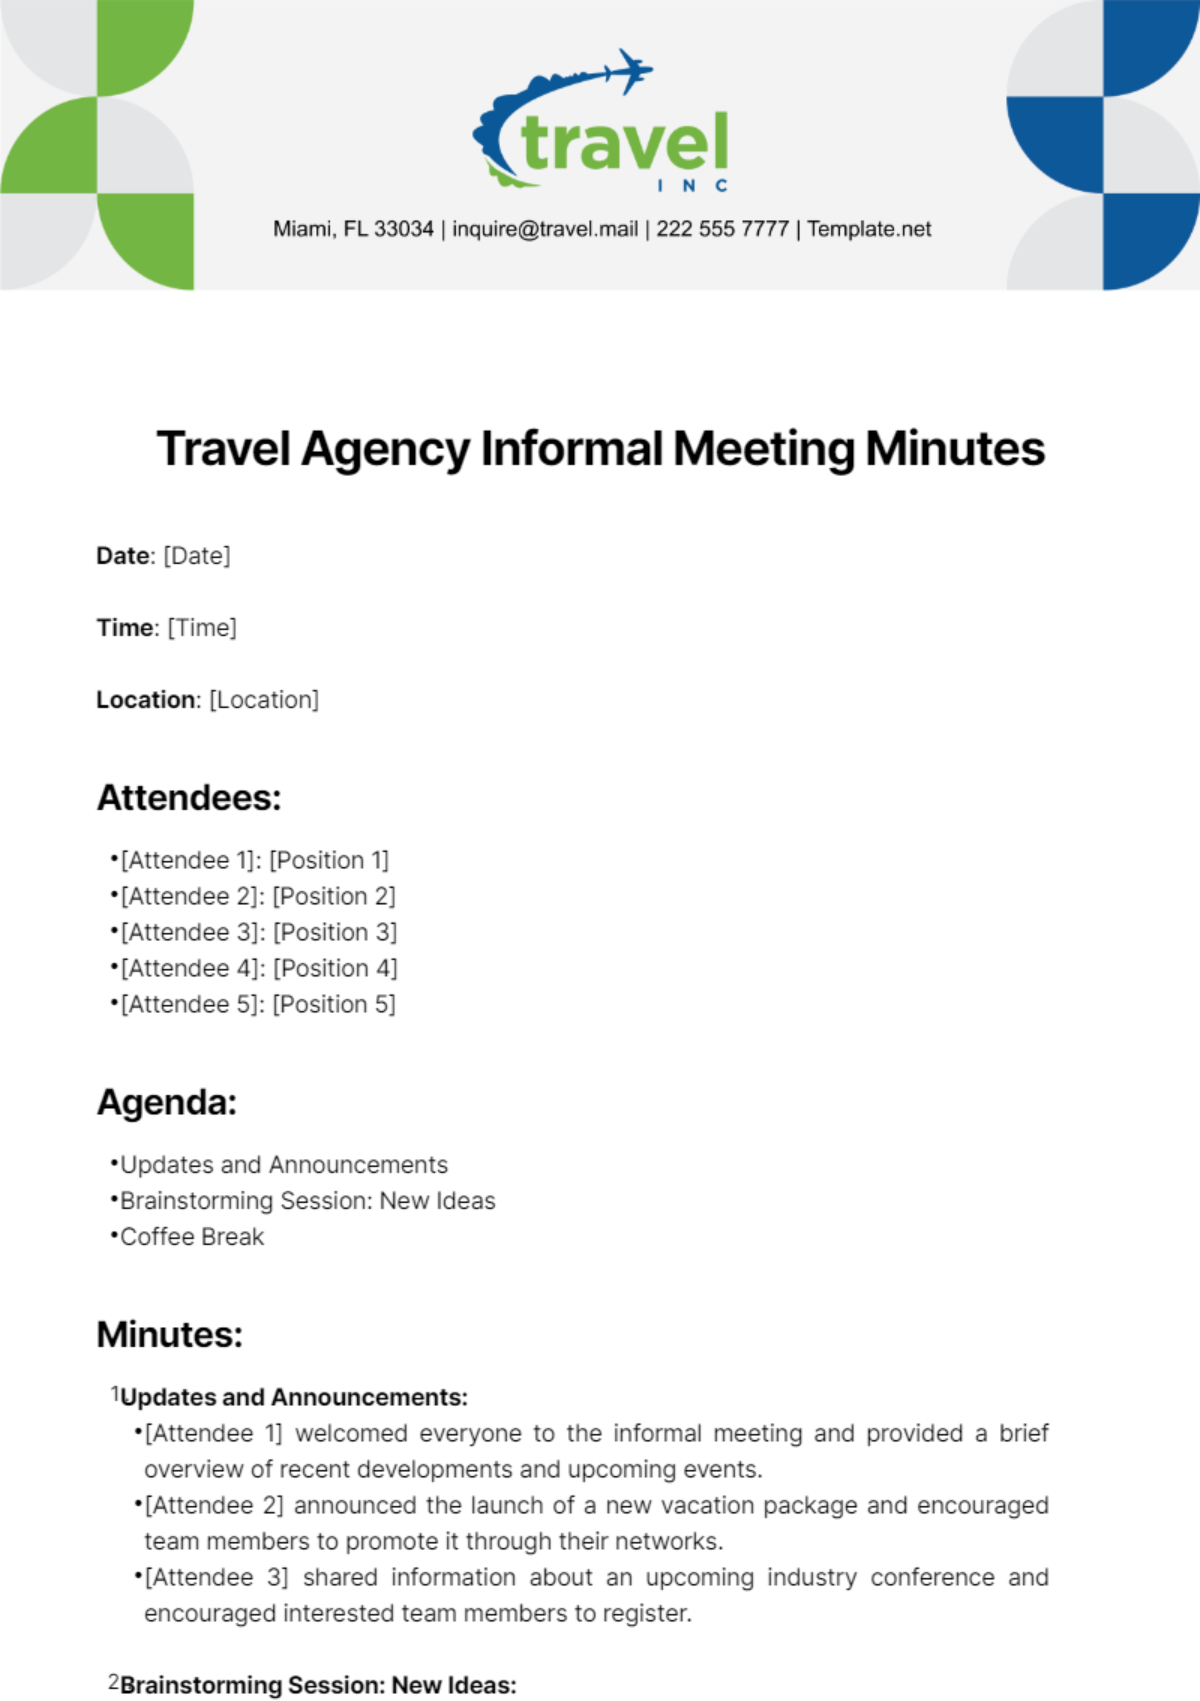 Travel Agency Informal Meeting Minutes Template